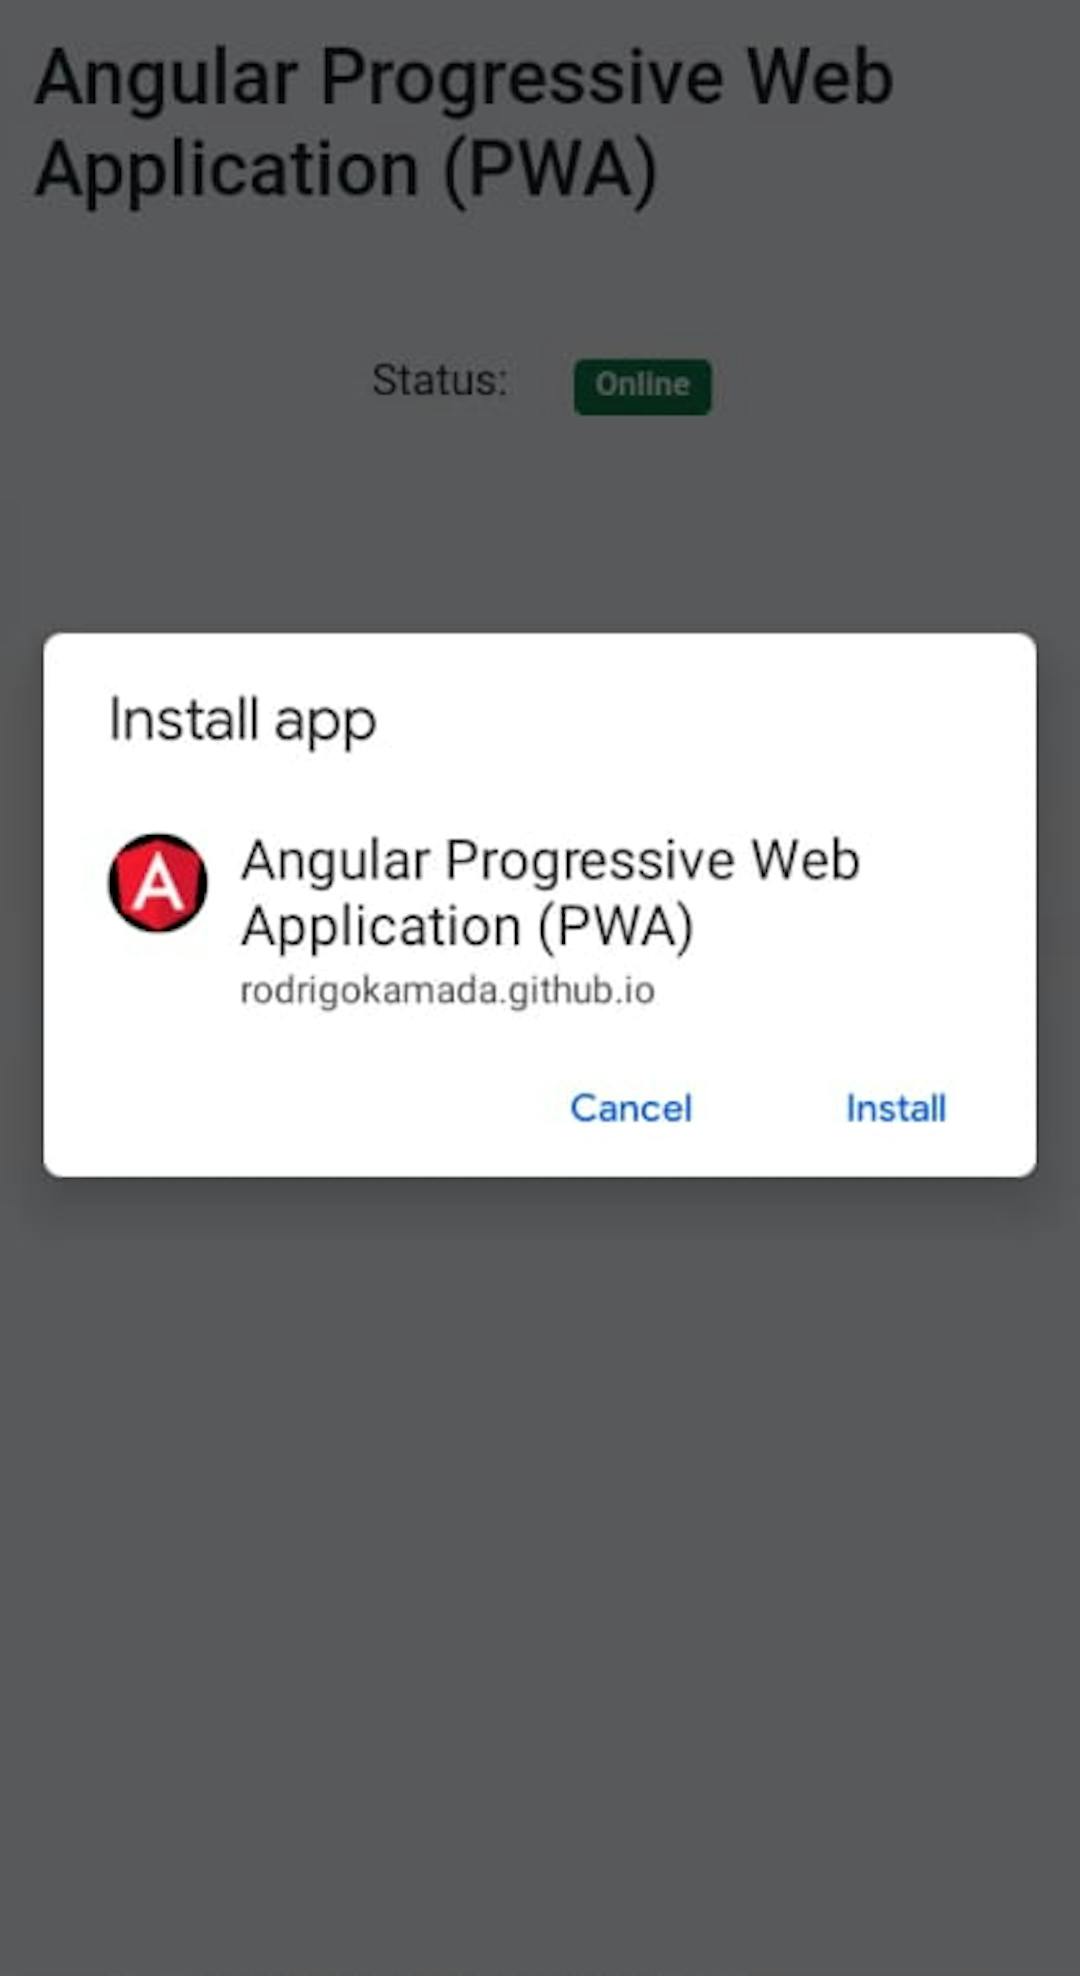 Angular Progressive Web Application (PWA) - Android confirm add application